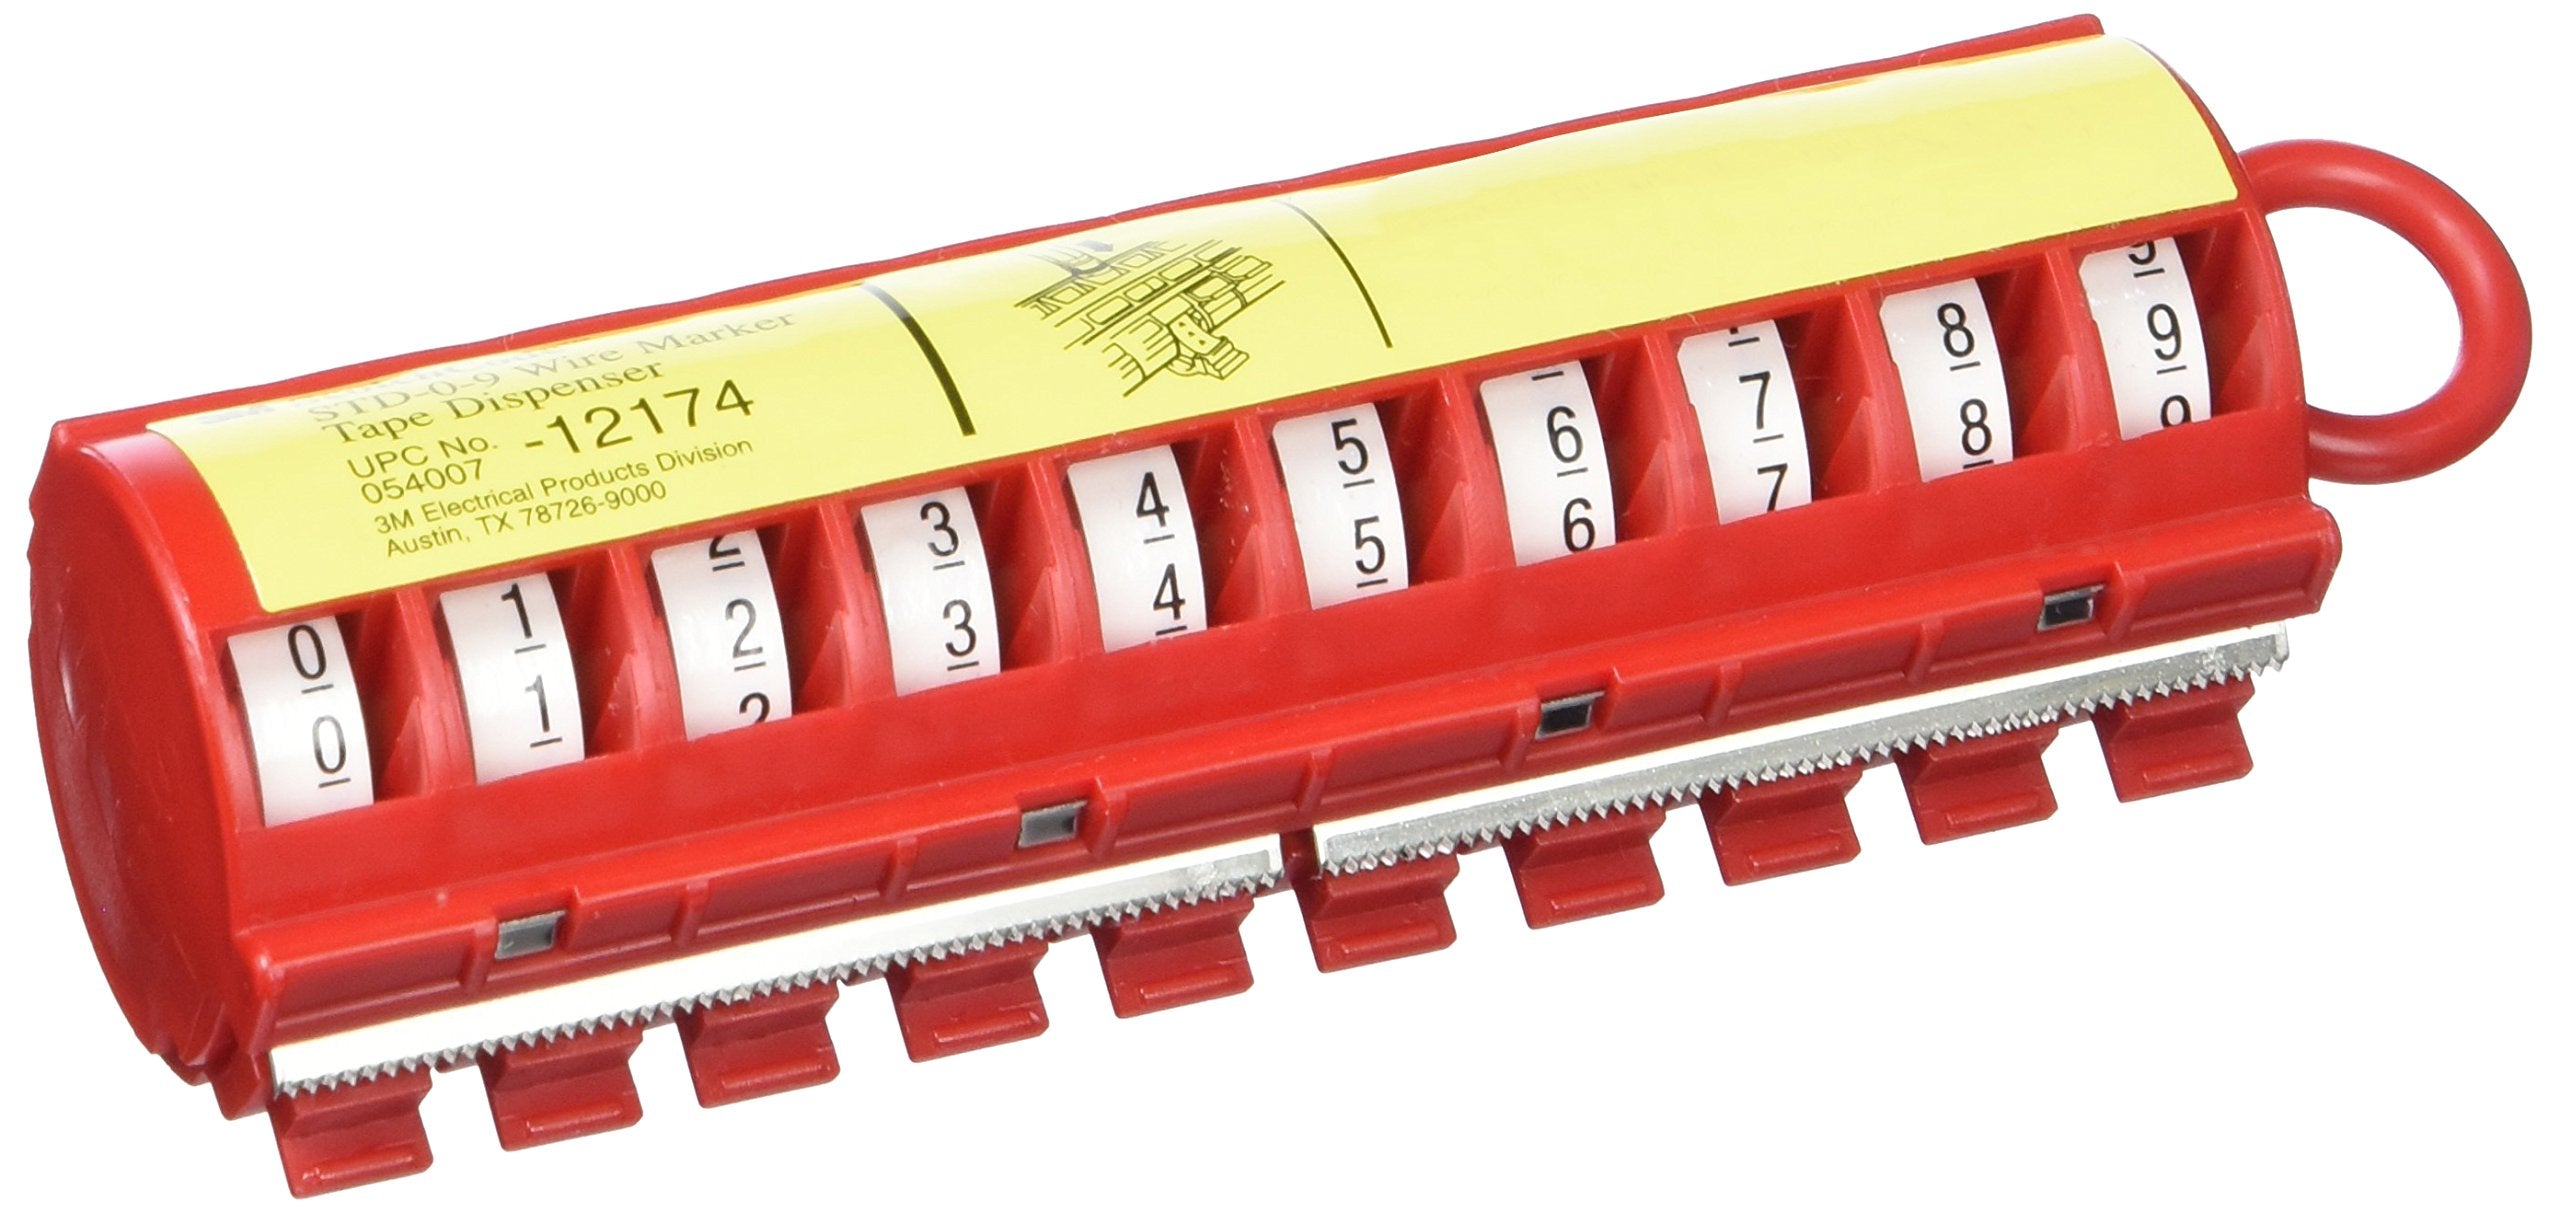 3M(TM) ScotchCode(TM) Wire Marker Tape Dispenser w/ Tape STD-0-9, Includes 1 ea. of 0-9 numbered rolls